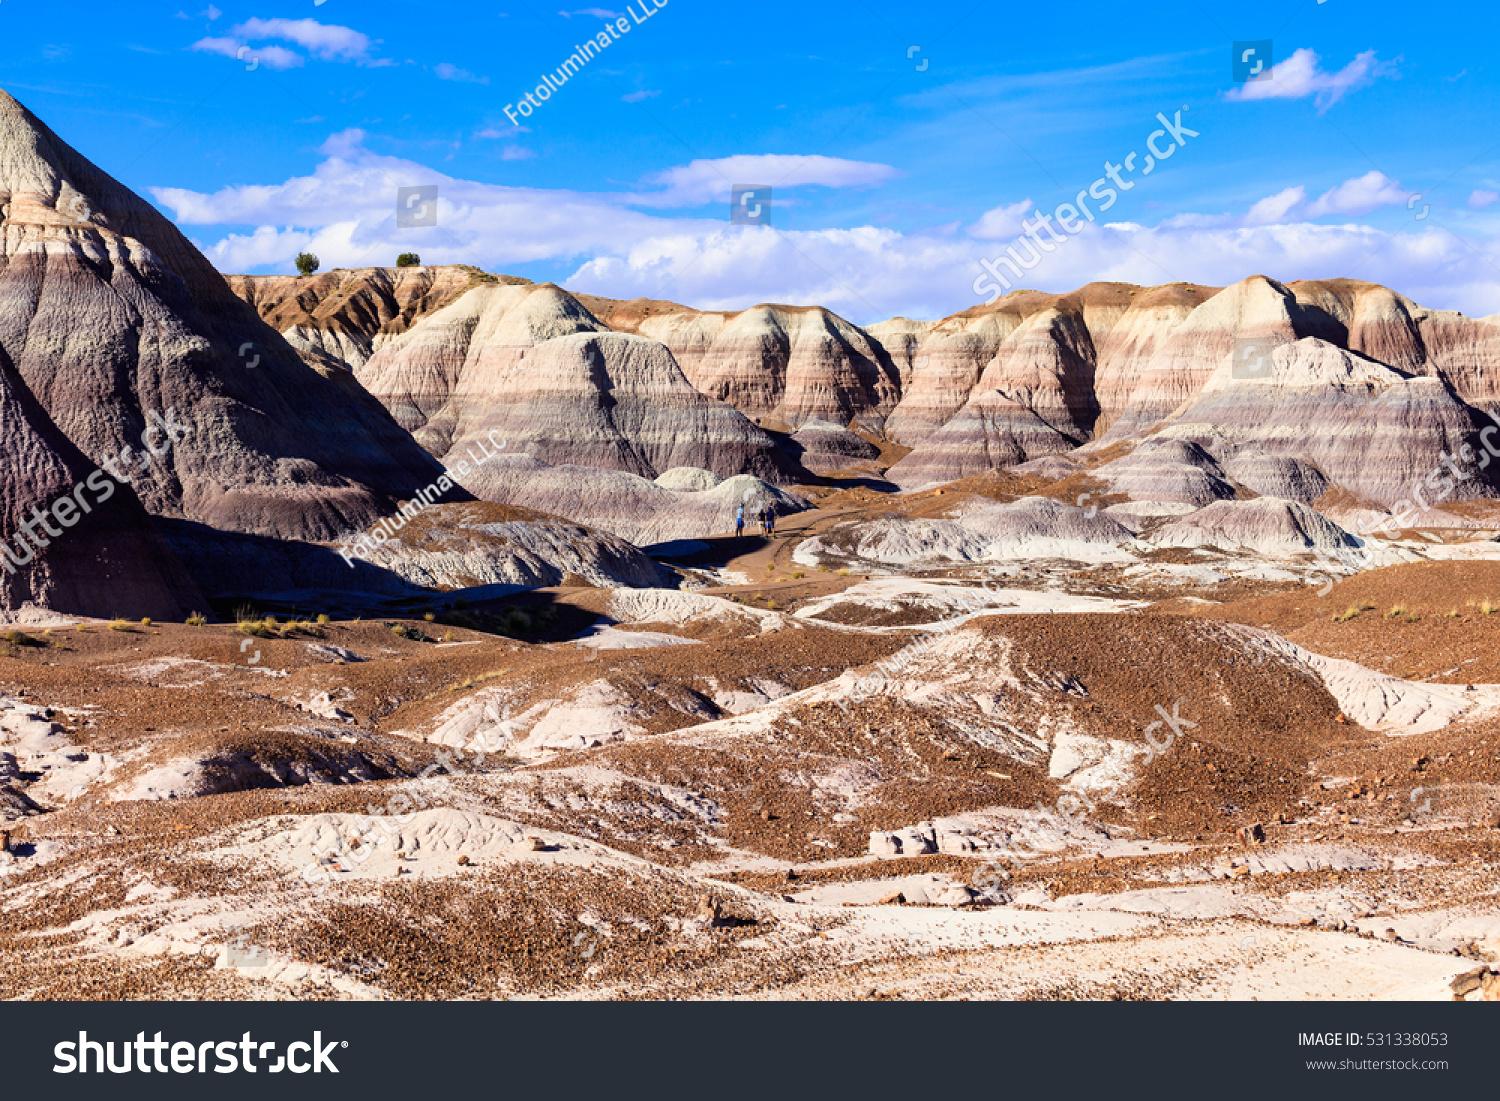 Desert landscape of the beautiful petrified forest in Arizona. #531338053